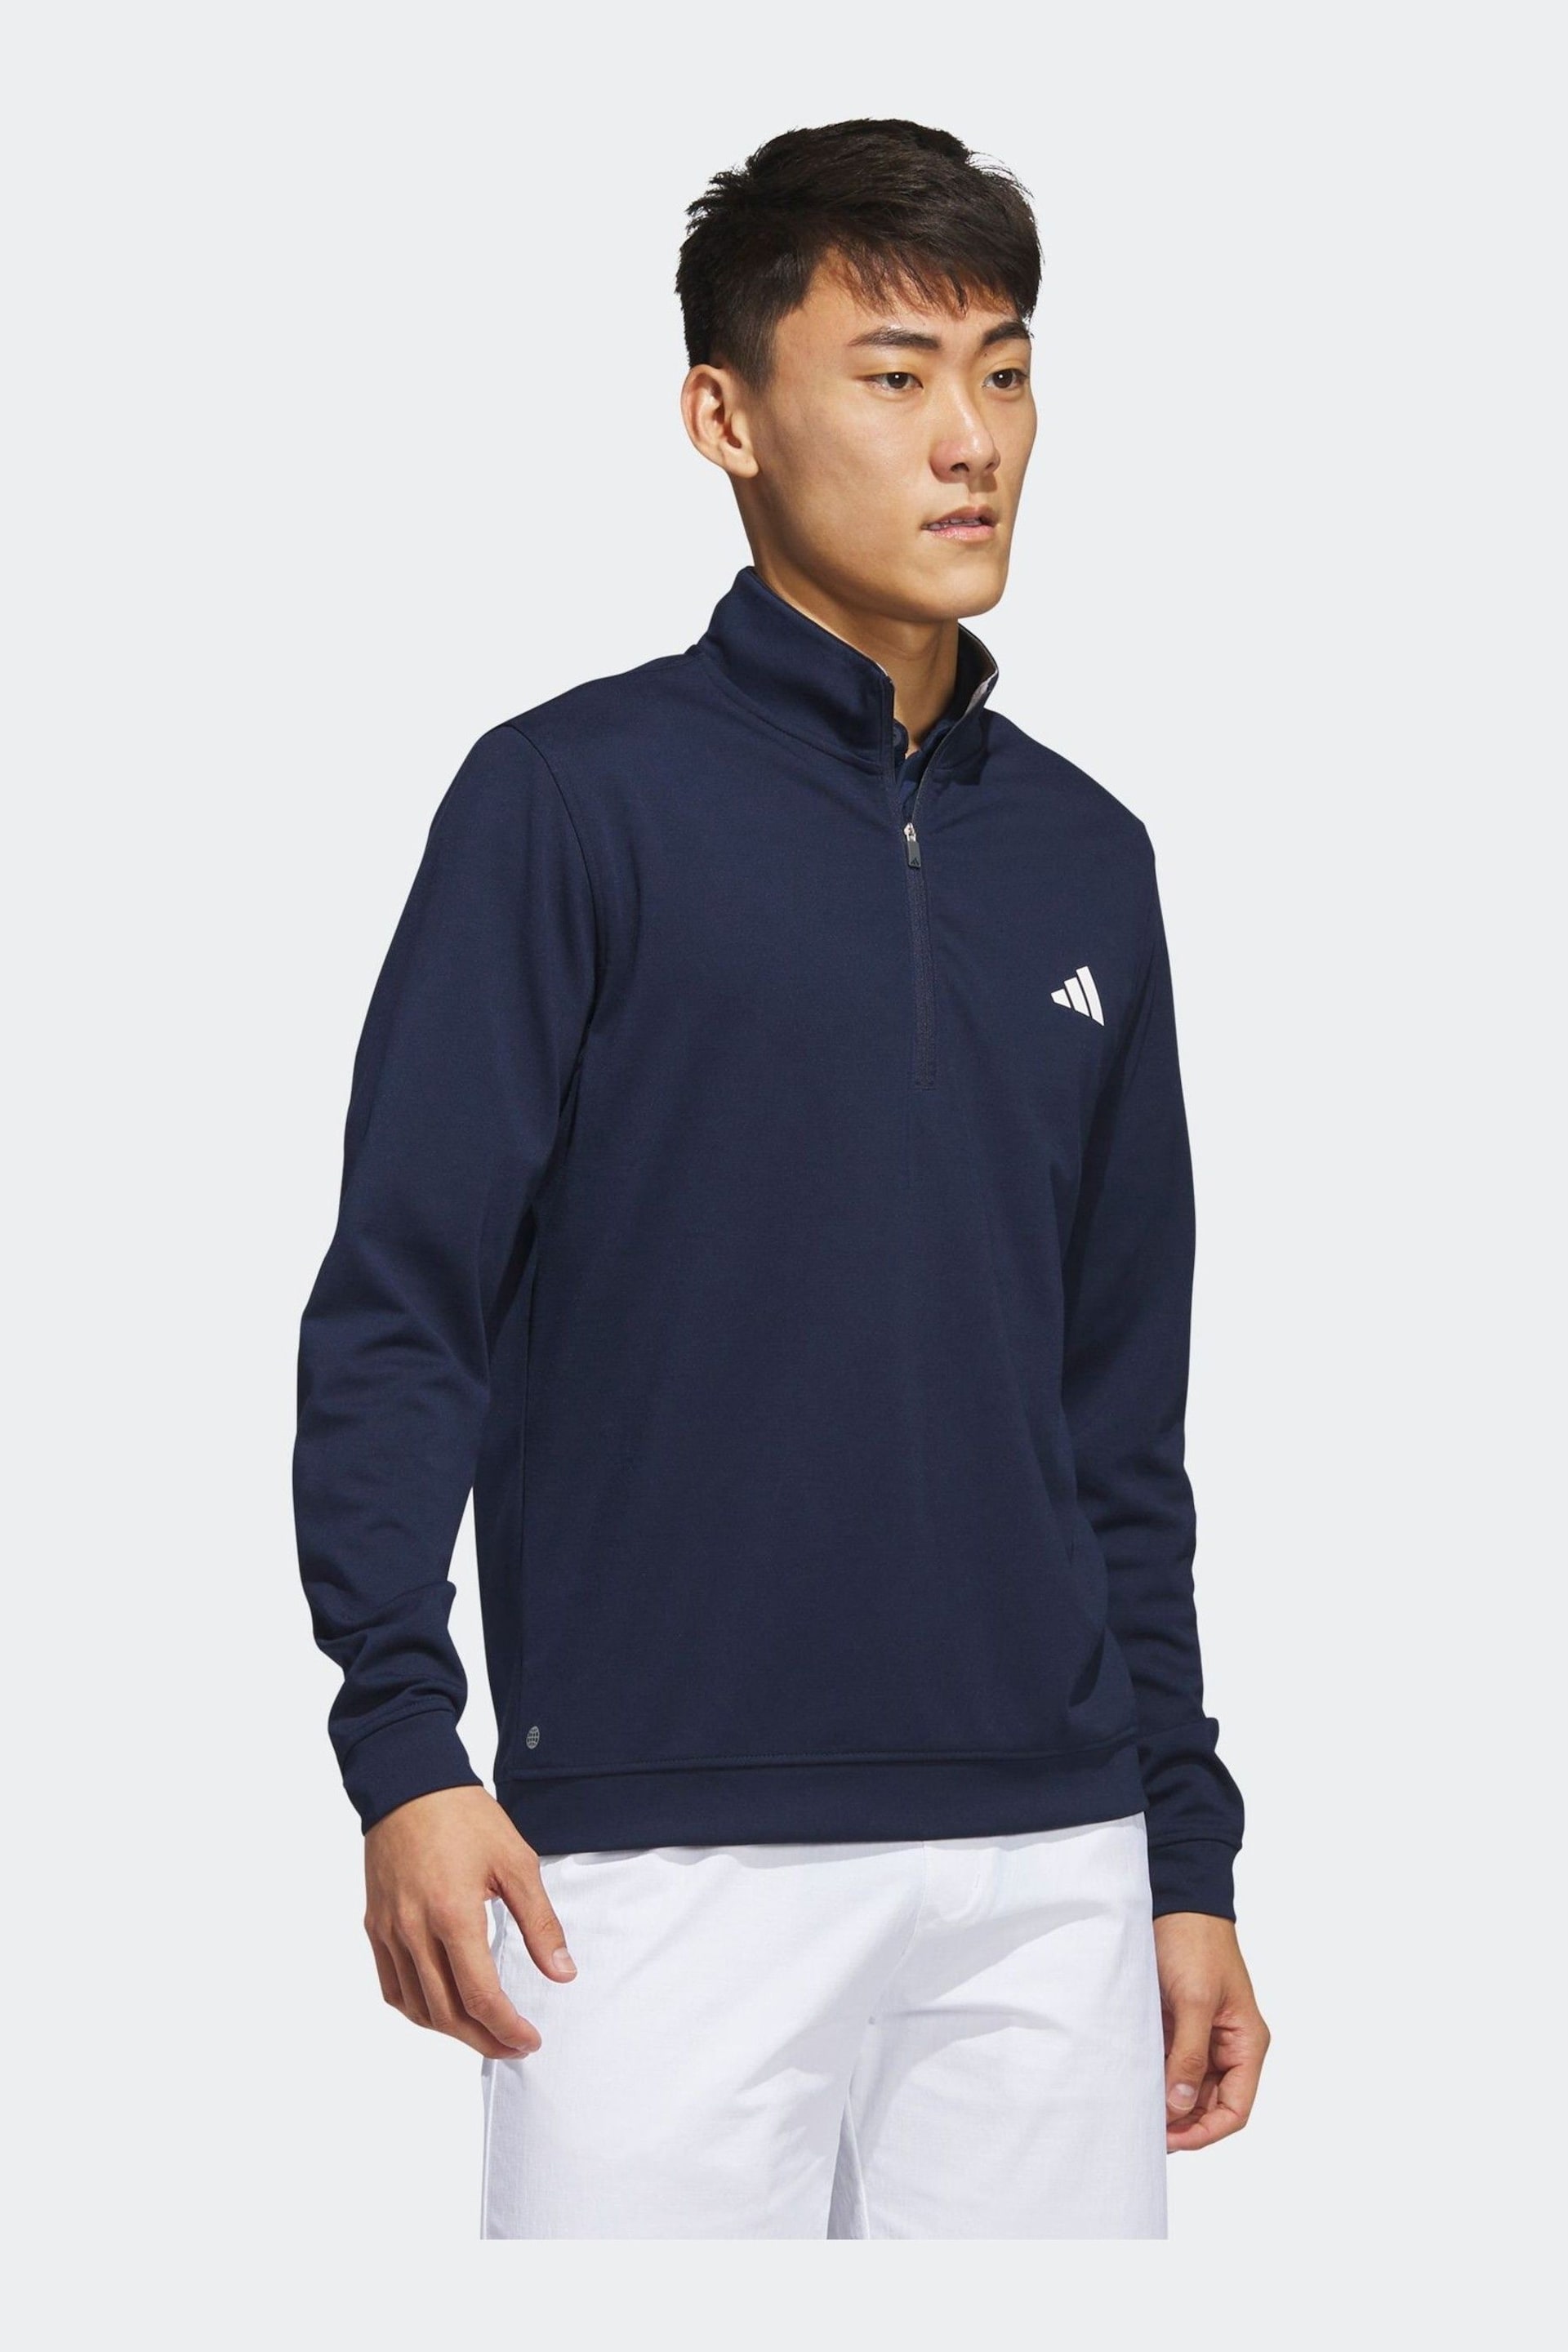 adidas Golf Elevated 1/4-Zip Black Sweatshirt - Image 4 of 7